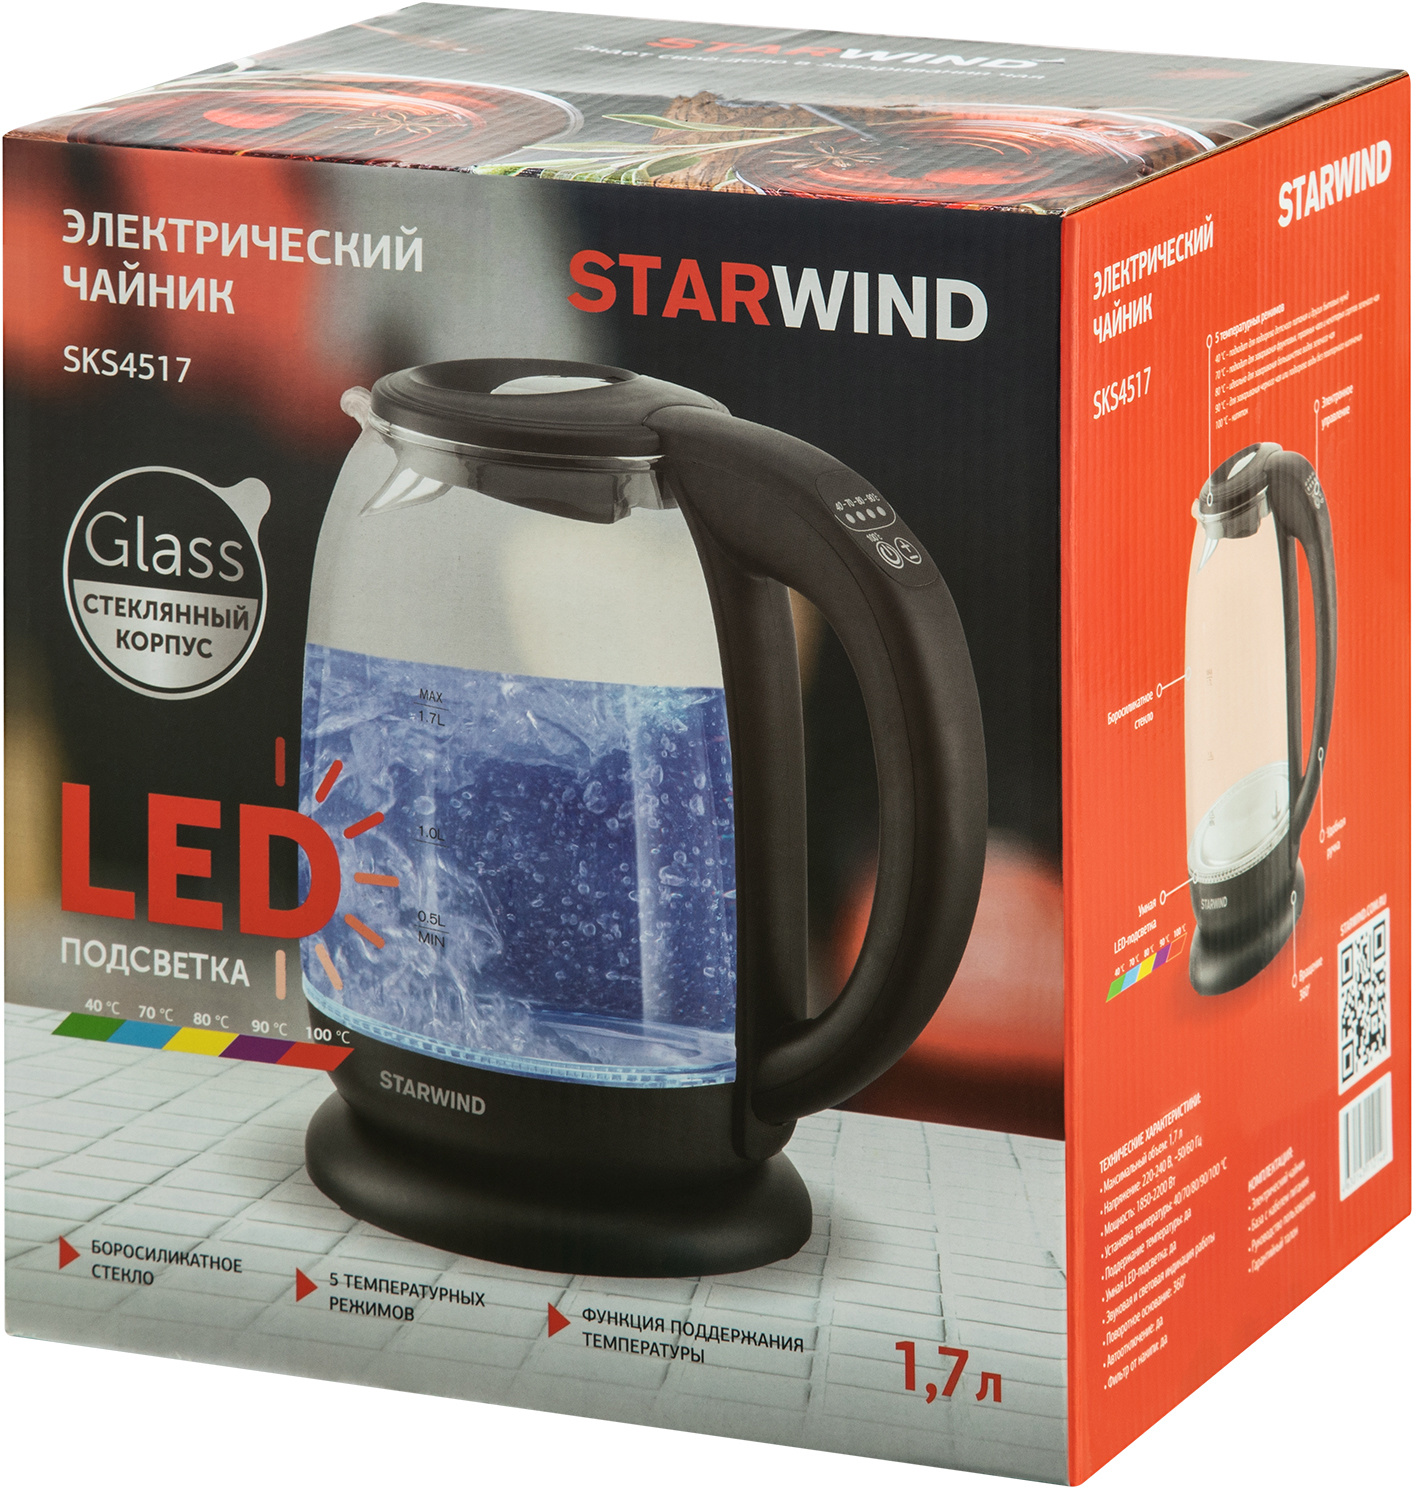 Чайник электрический Starwind SKS4517 черный, стекло от магазина Старвинд